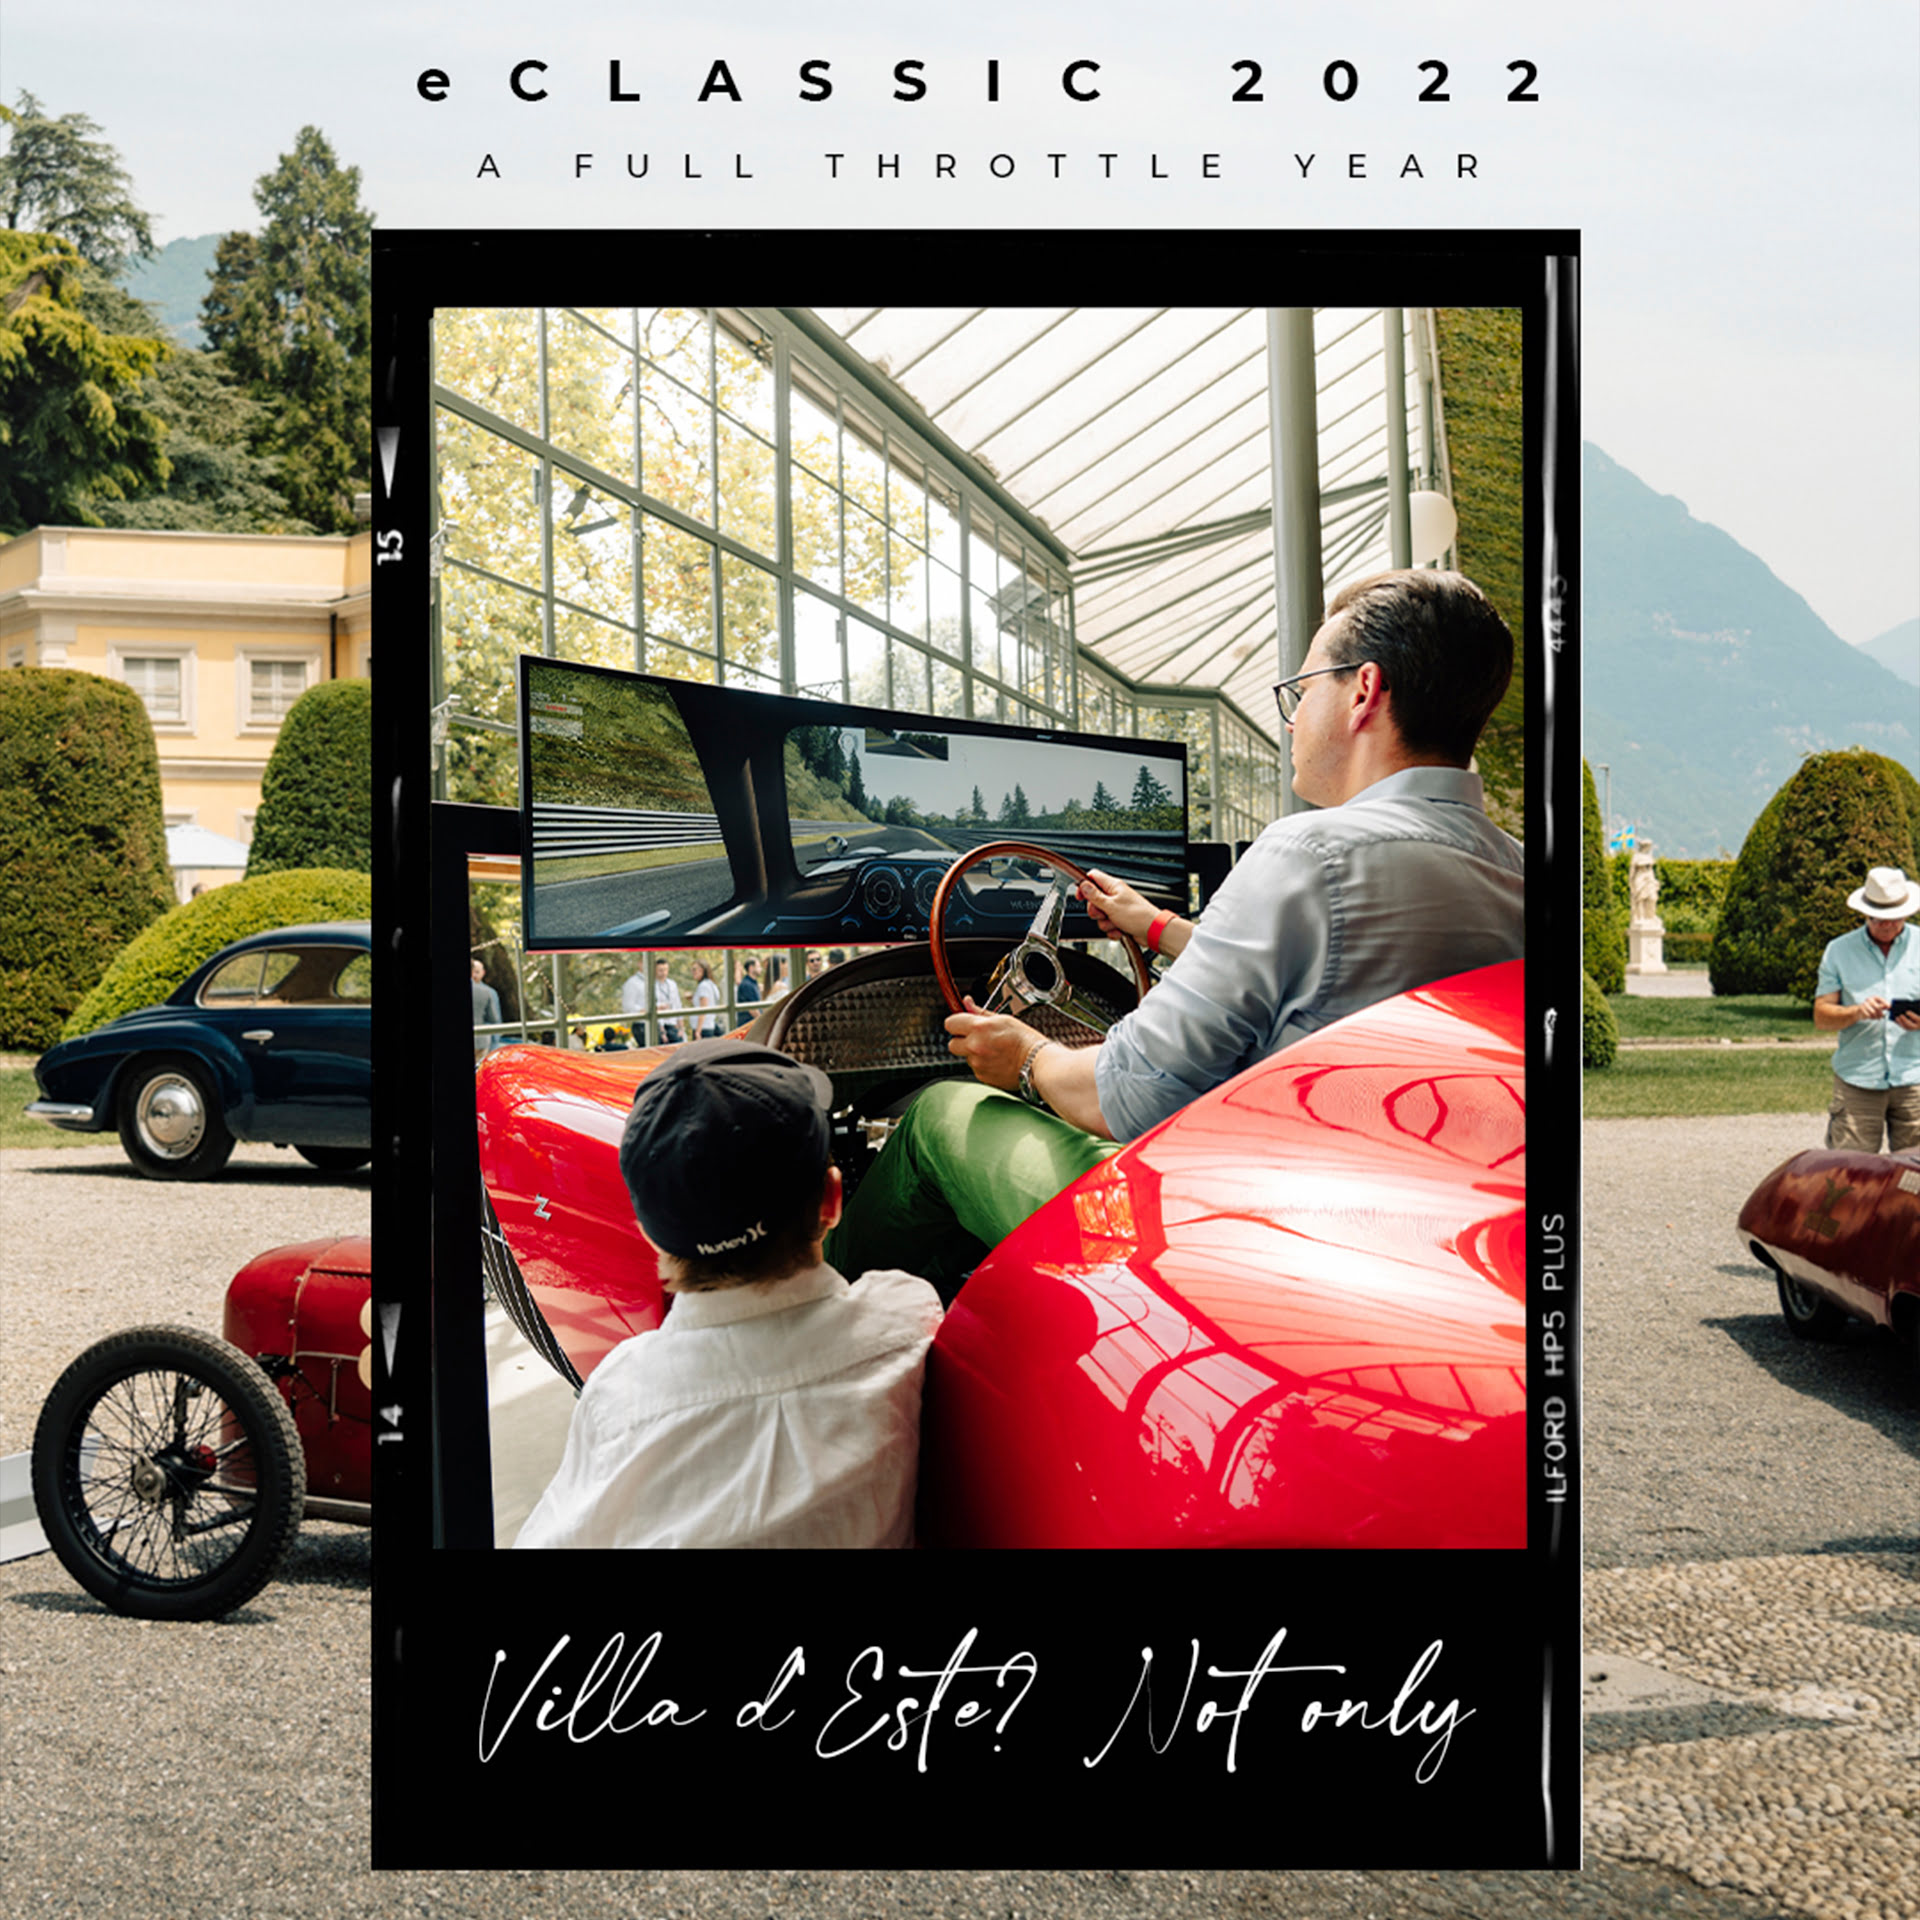 eClassic 2022: a full throttle year Villa d’Este? Not only image